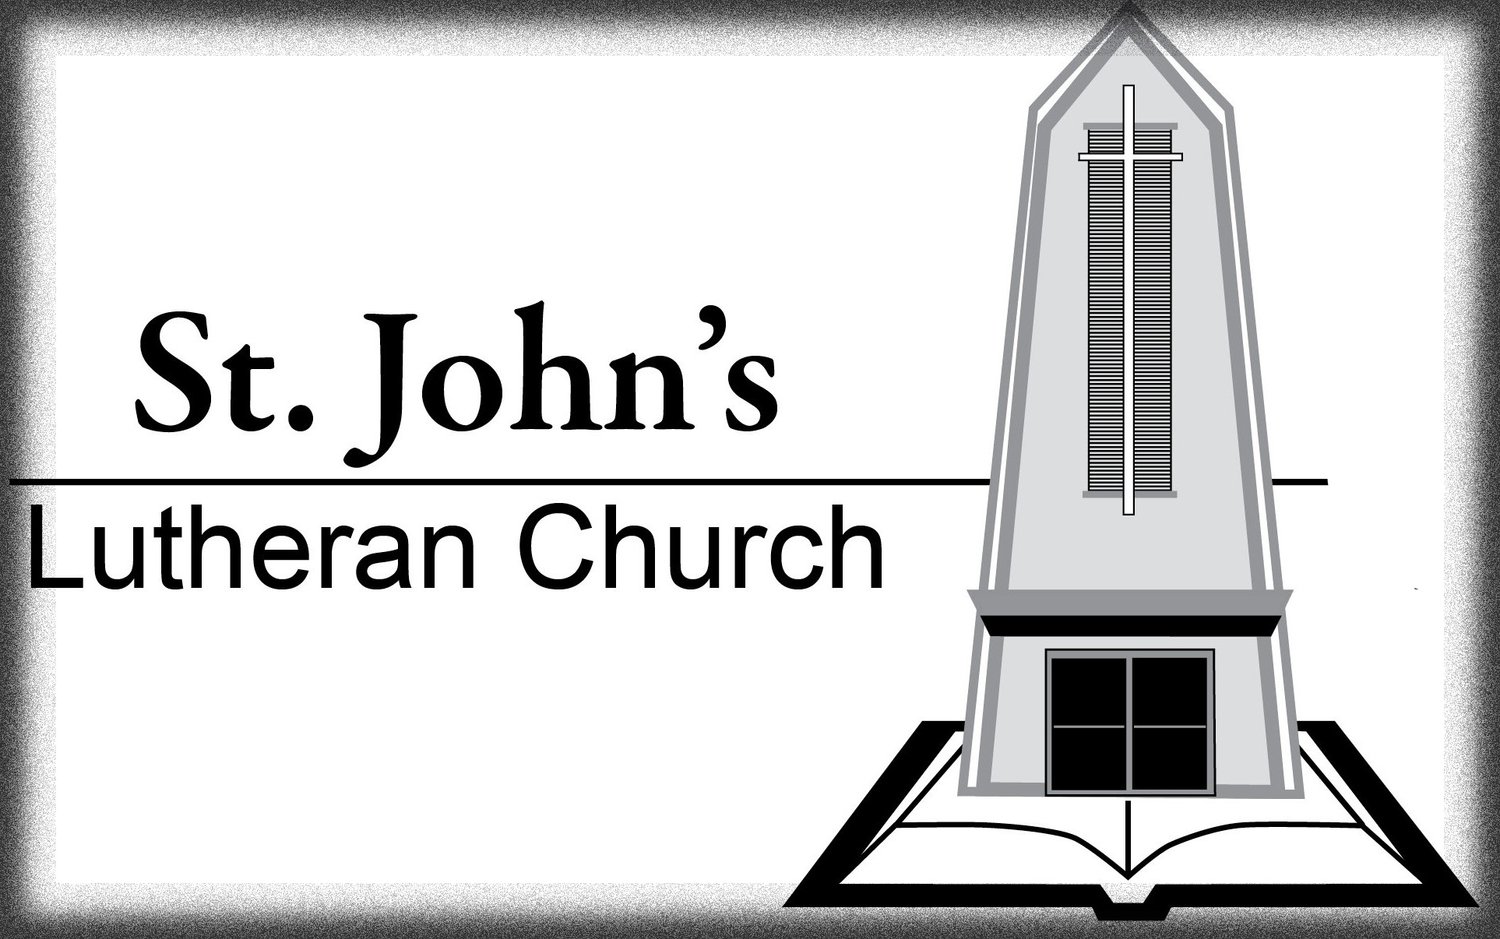 Saint John's Lutheran Church and School